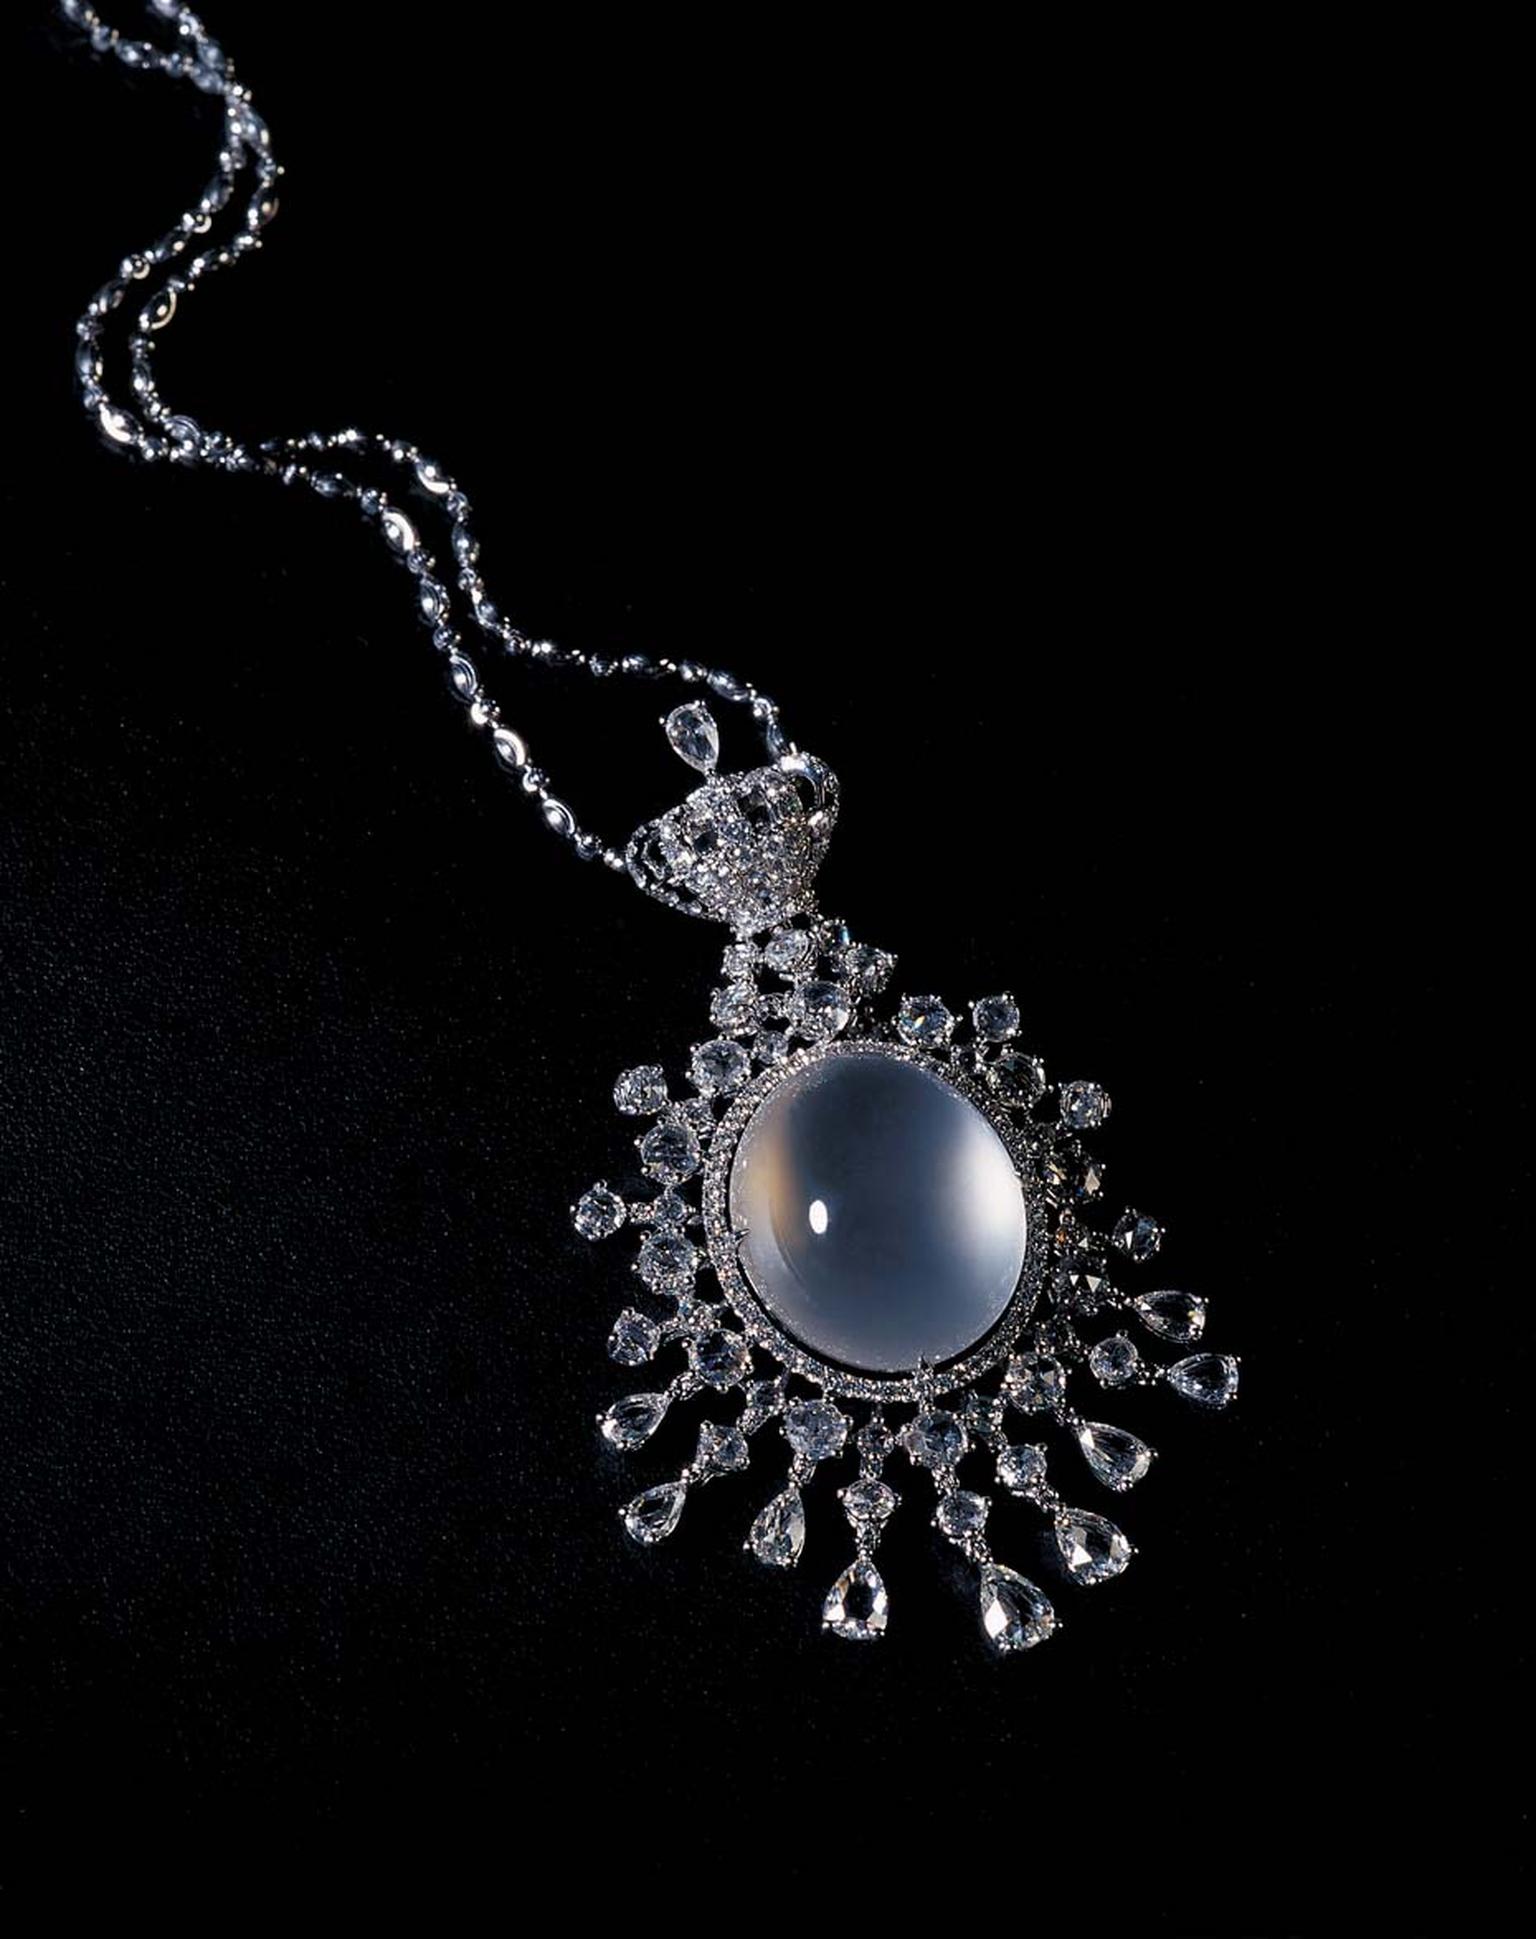 Colourless icy jadeite pendant necklace with diamonds.